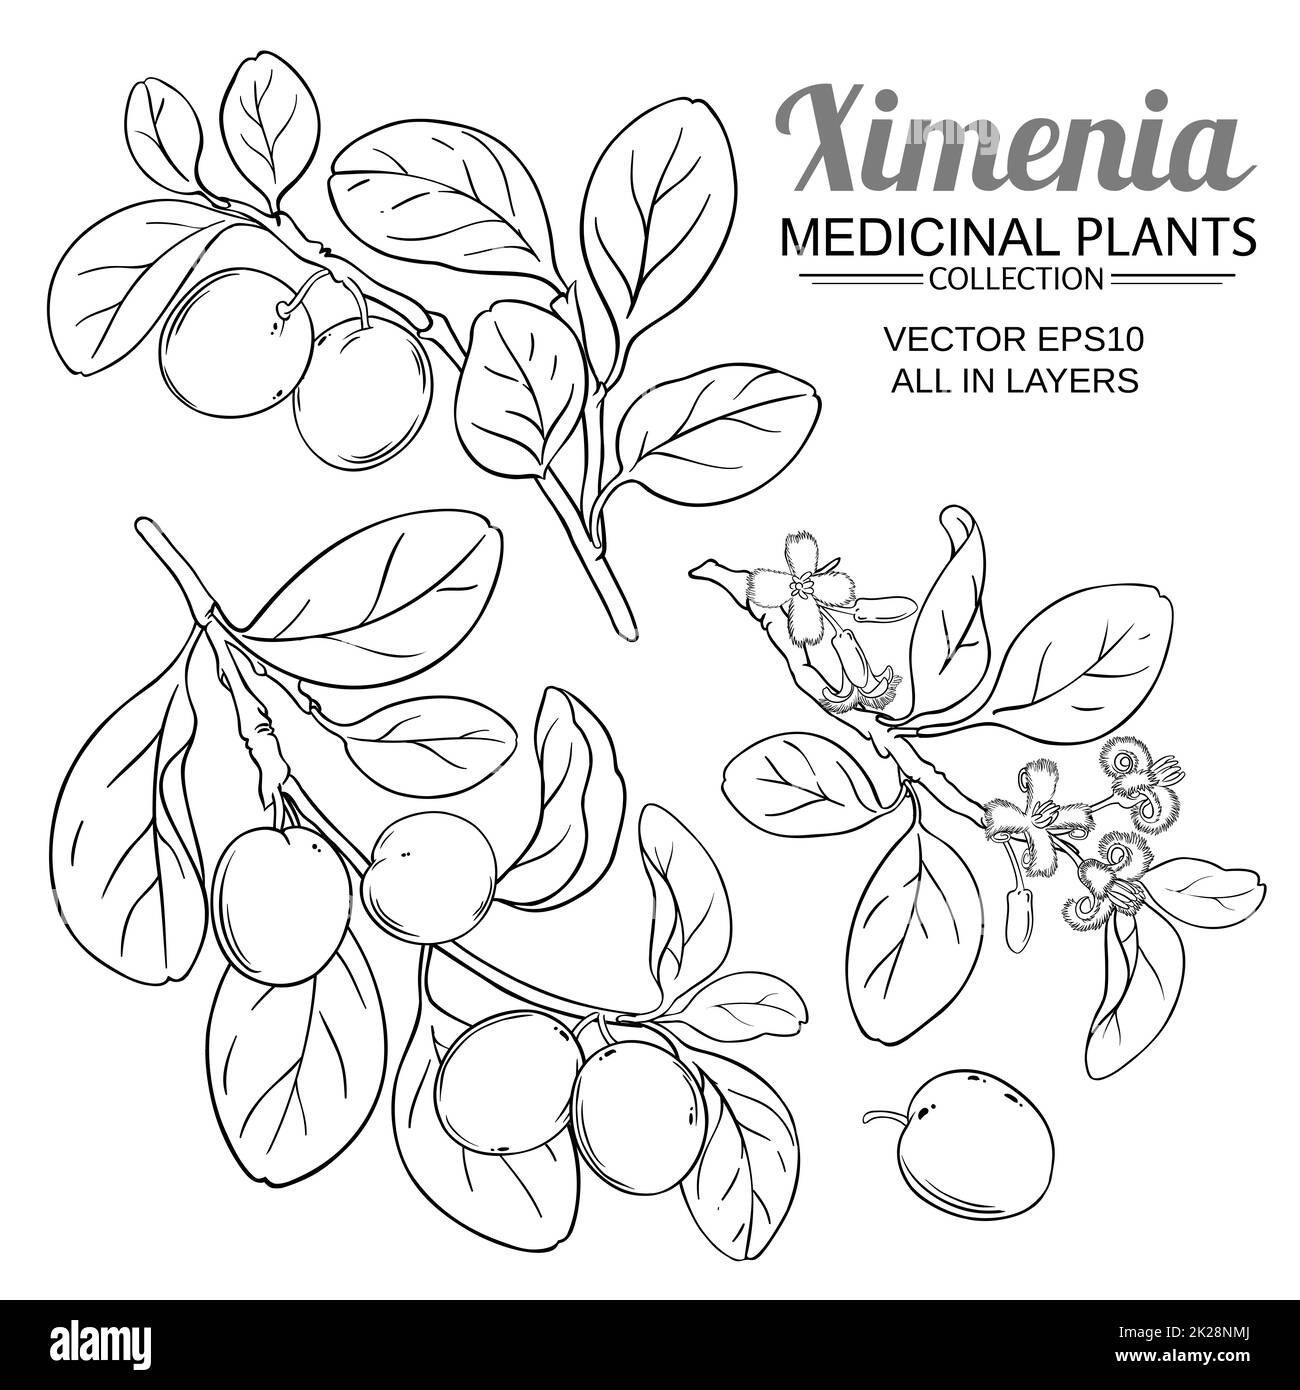 ximenia branches vector set on white background Stock Photo